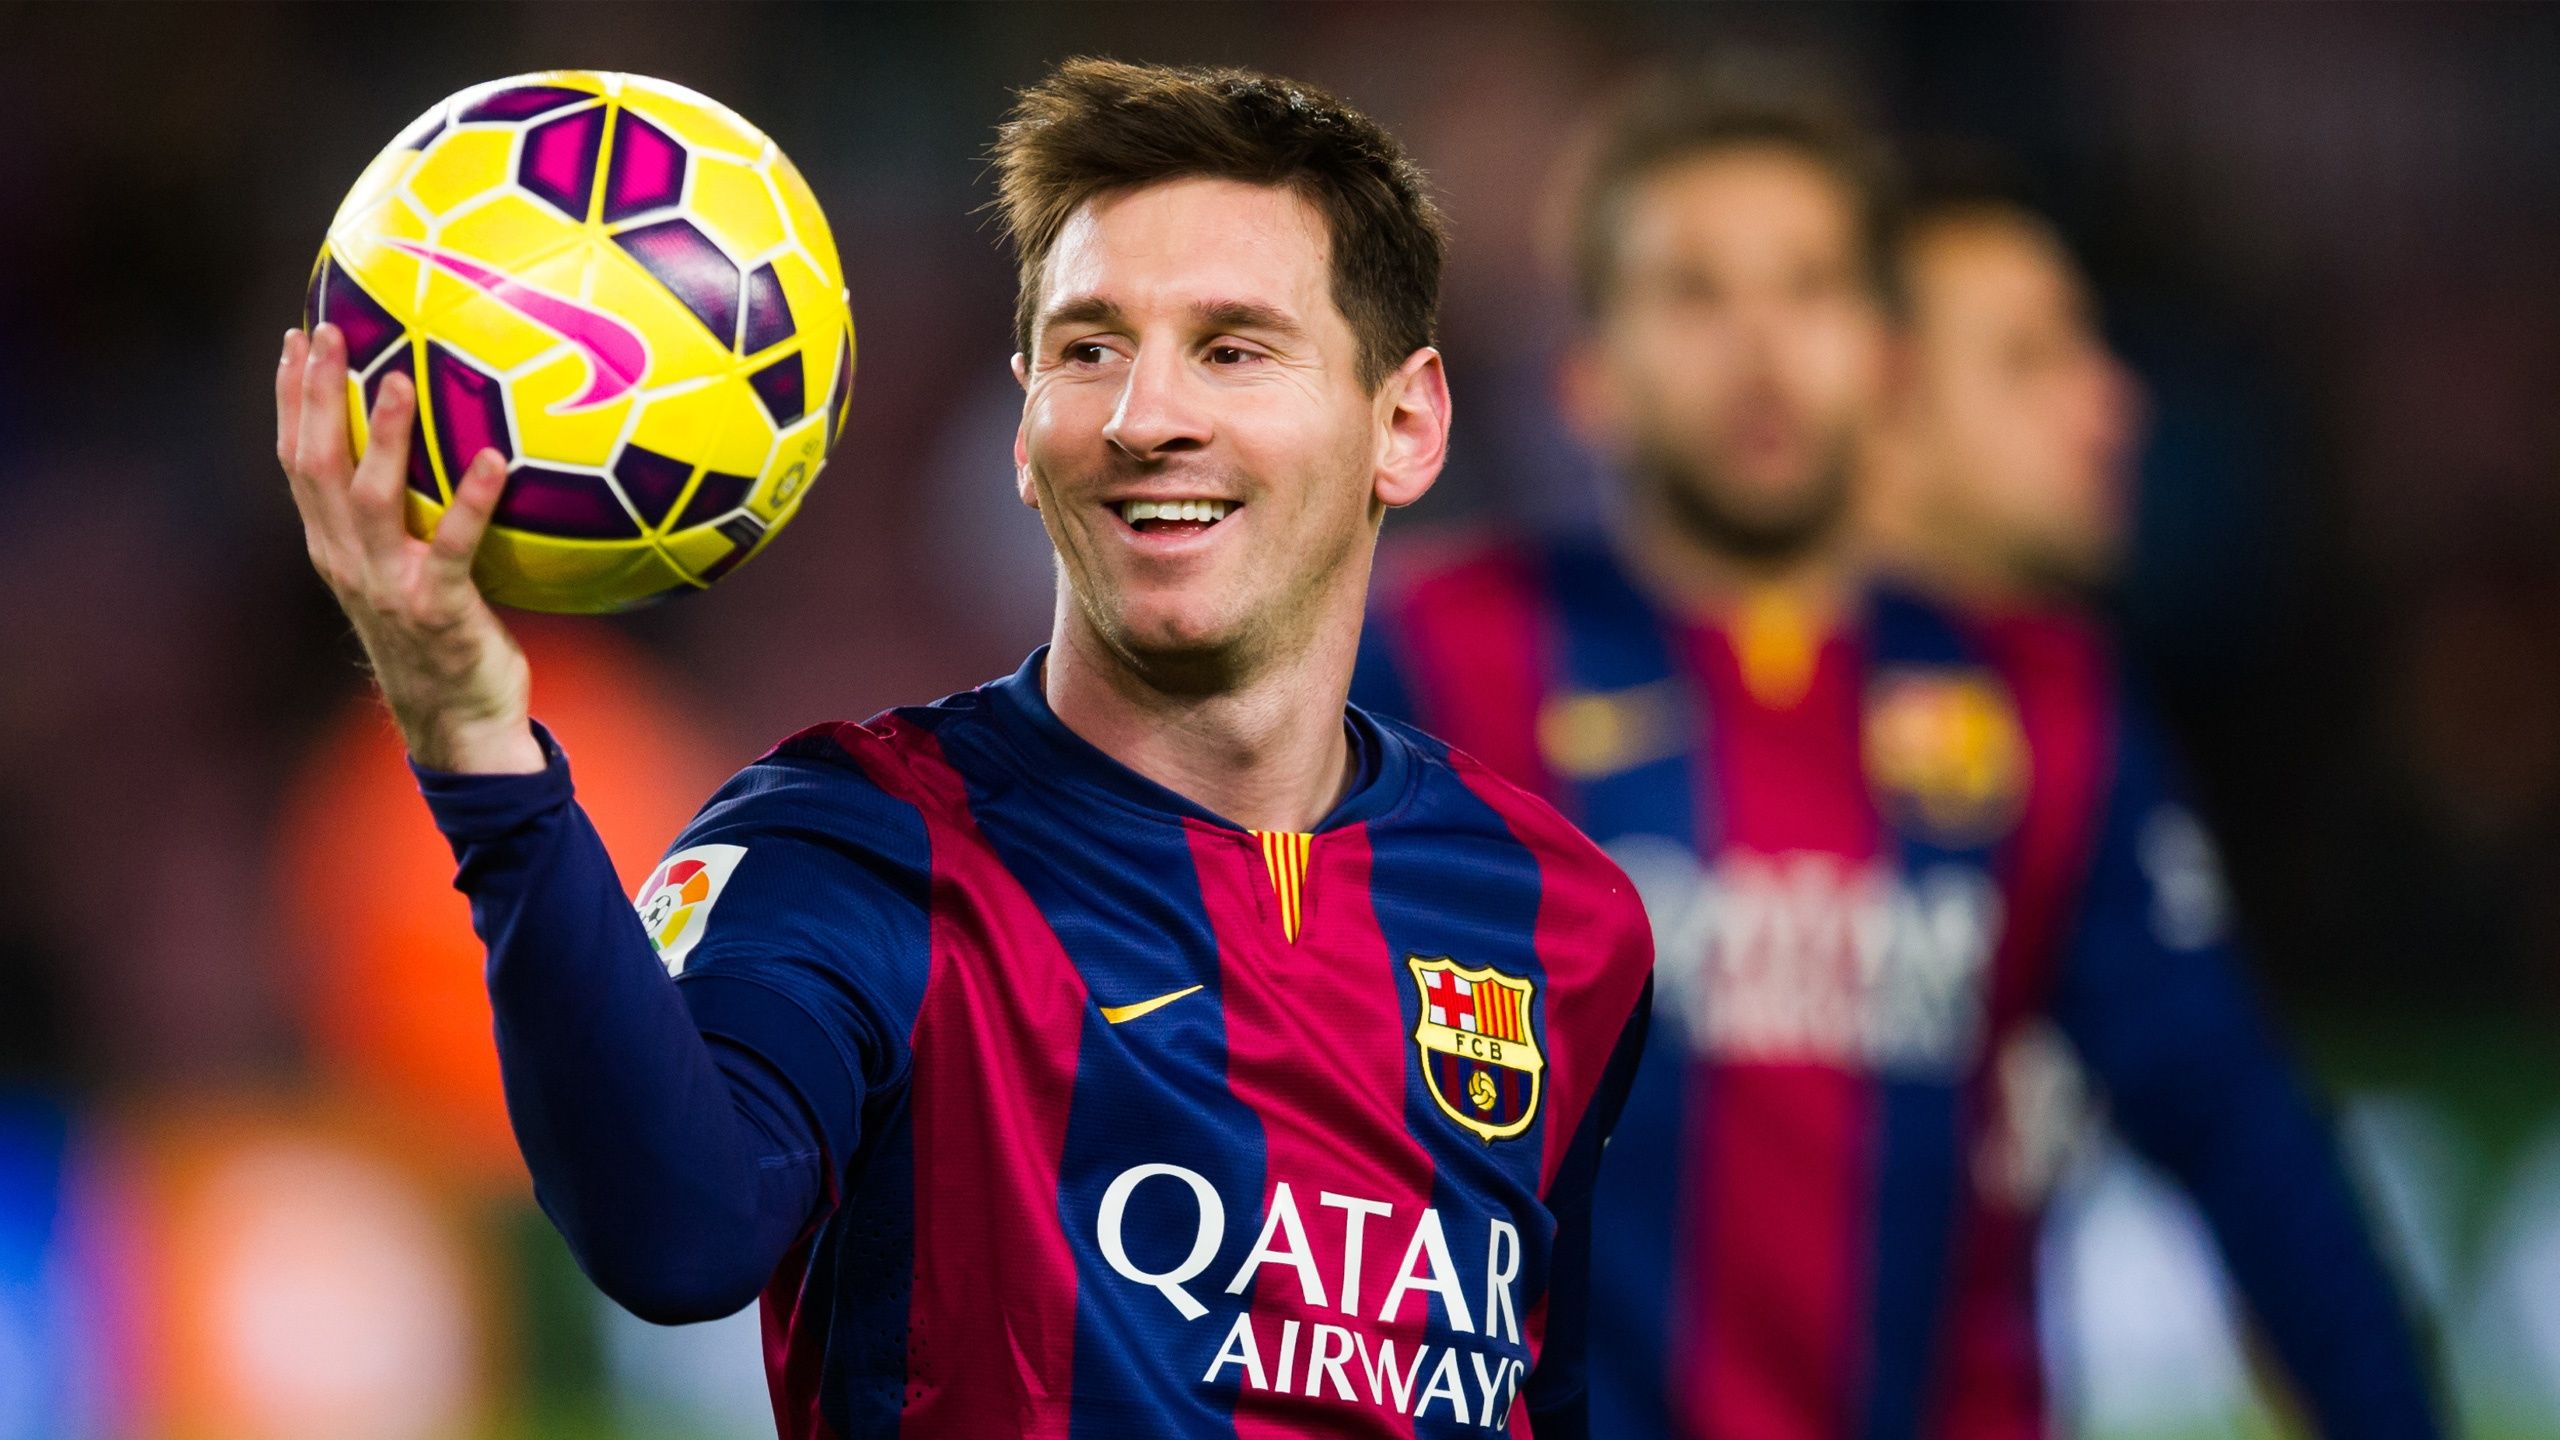 Messi HD Wallpaper Free Download